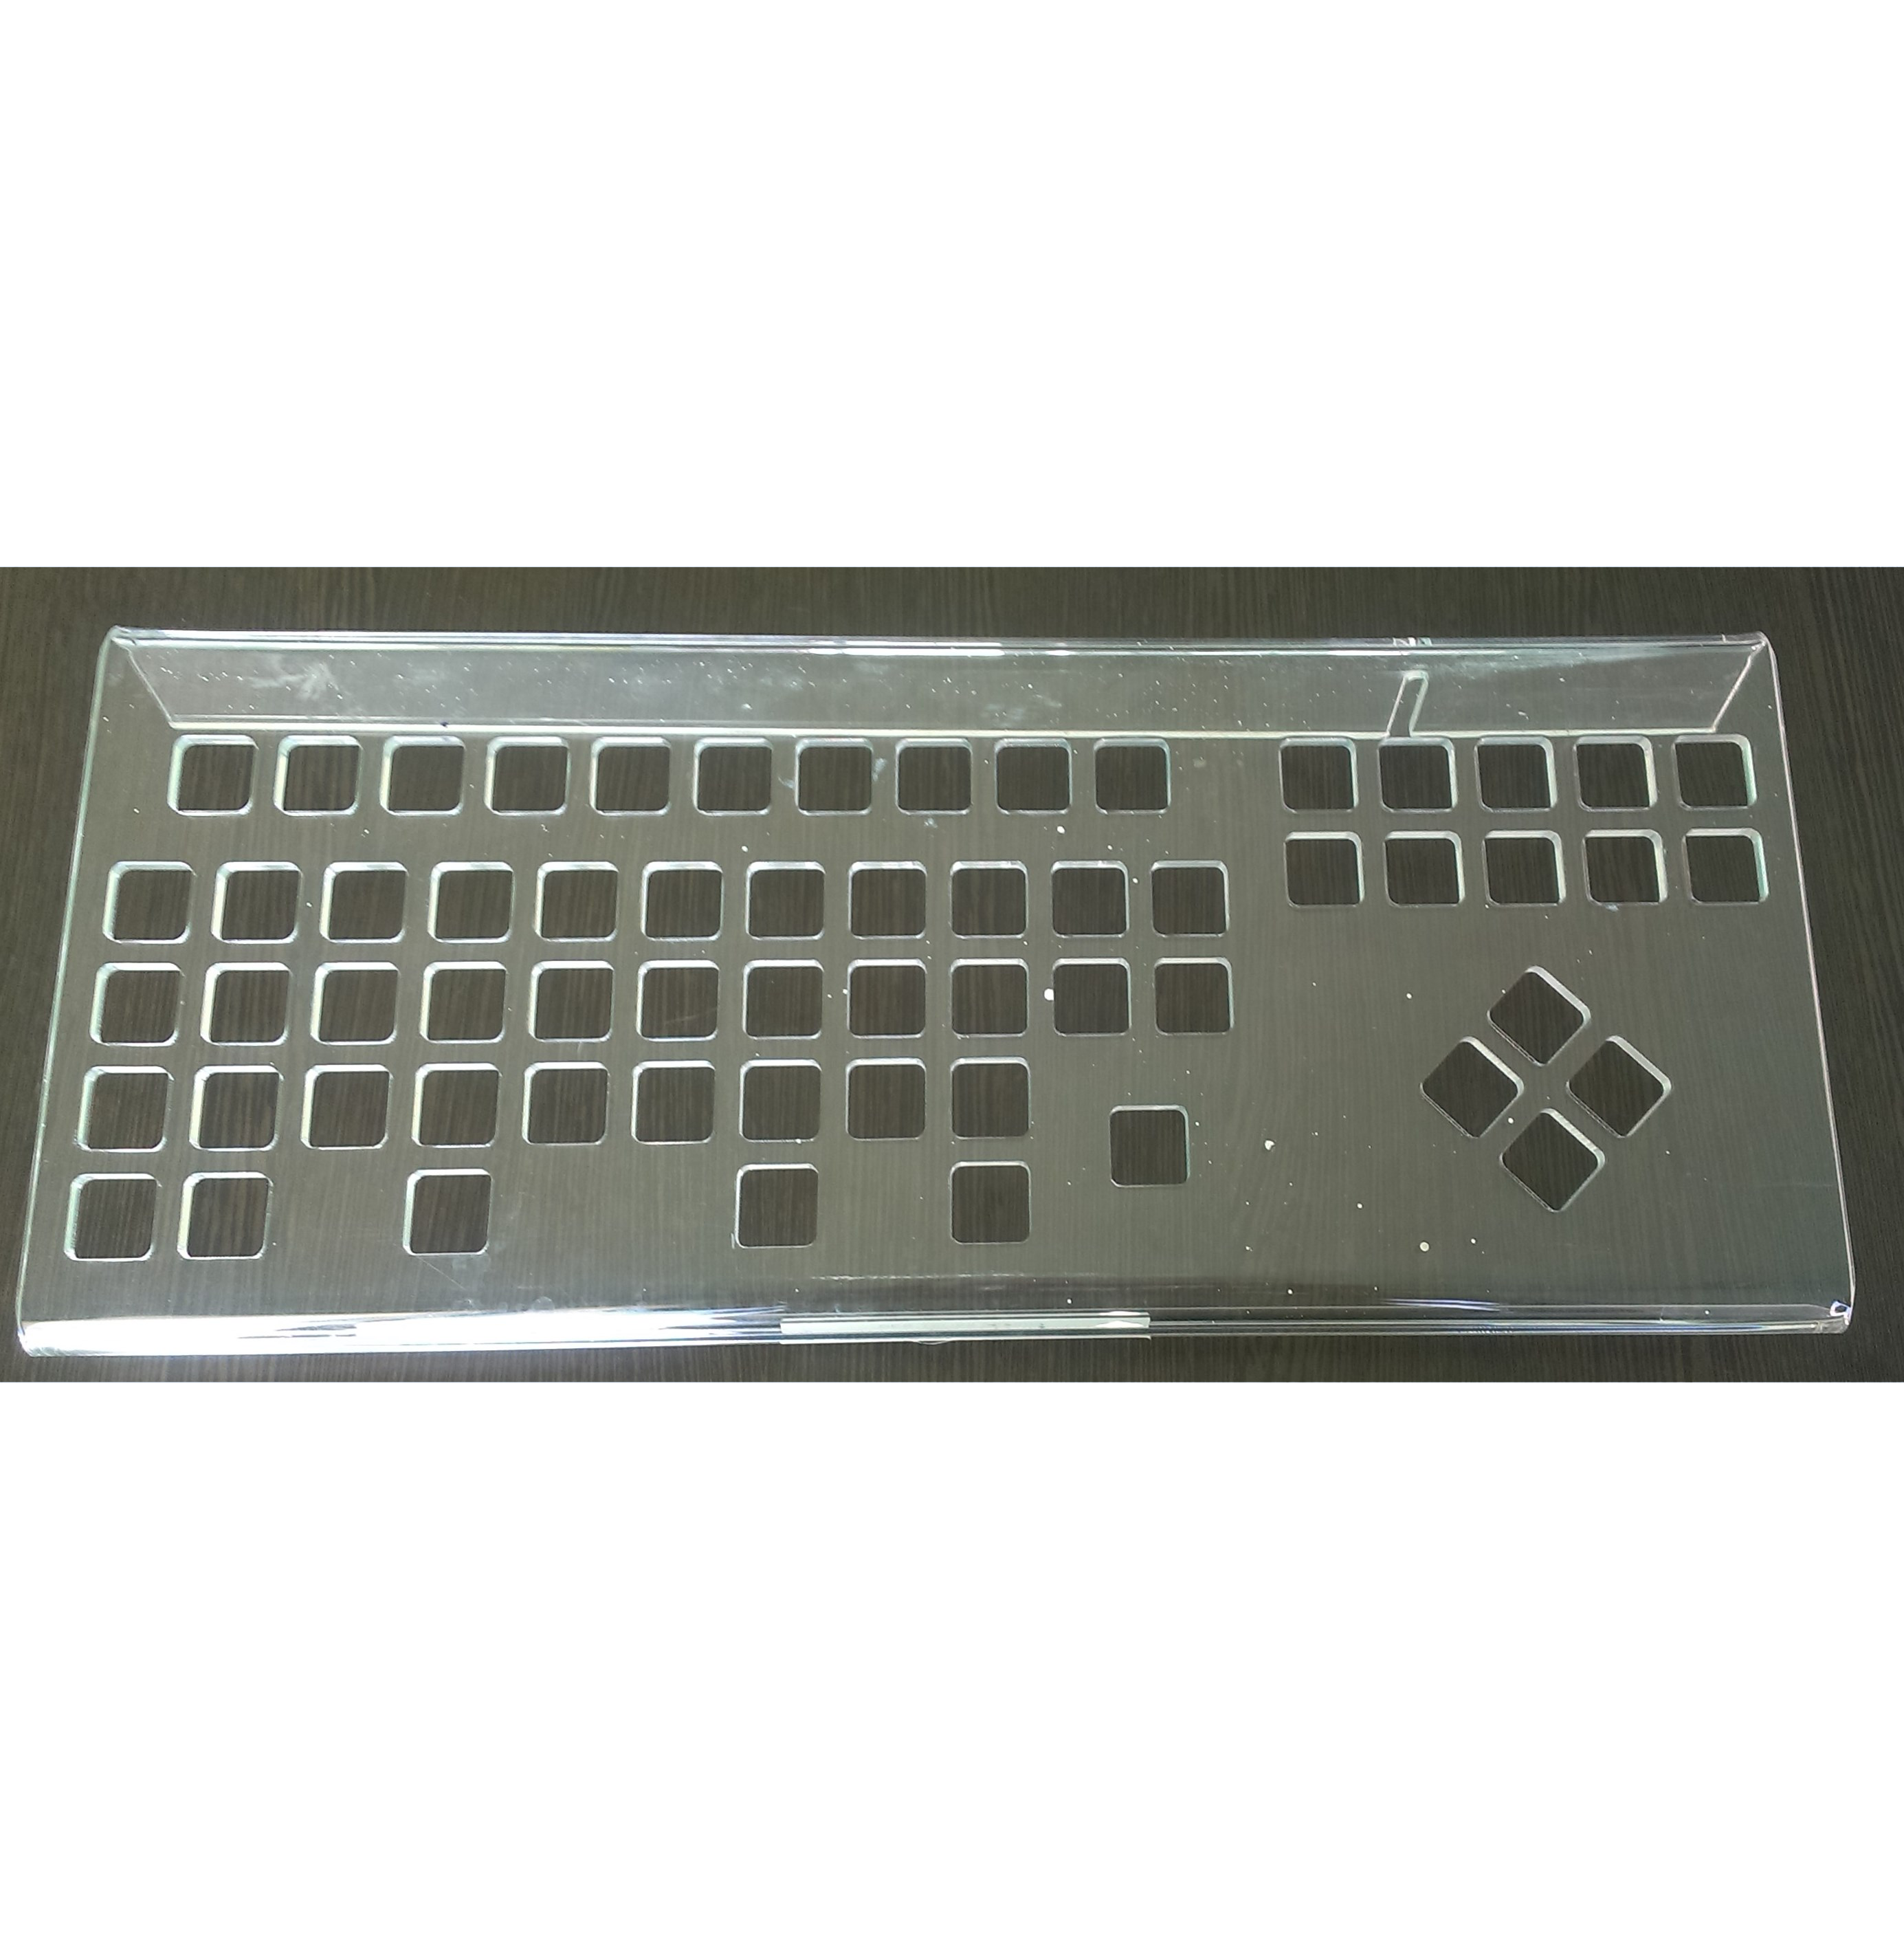 Keyguard for Big Keys Keyboard (plastic)